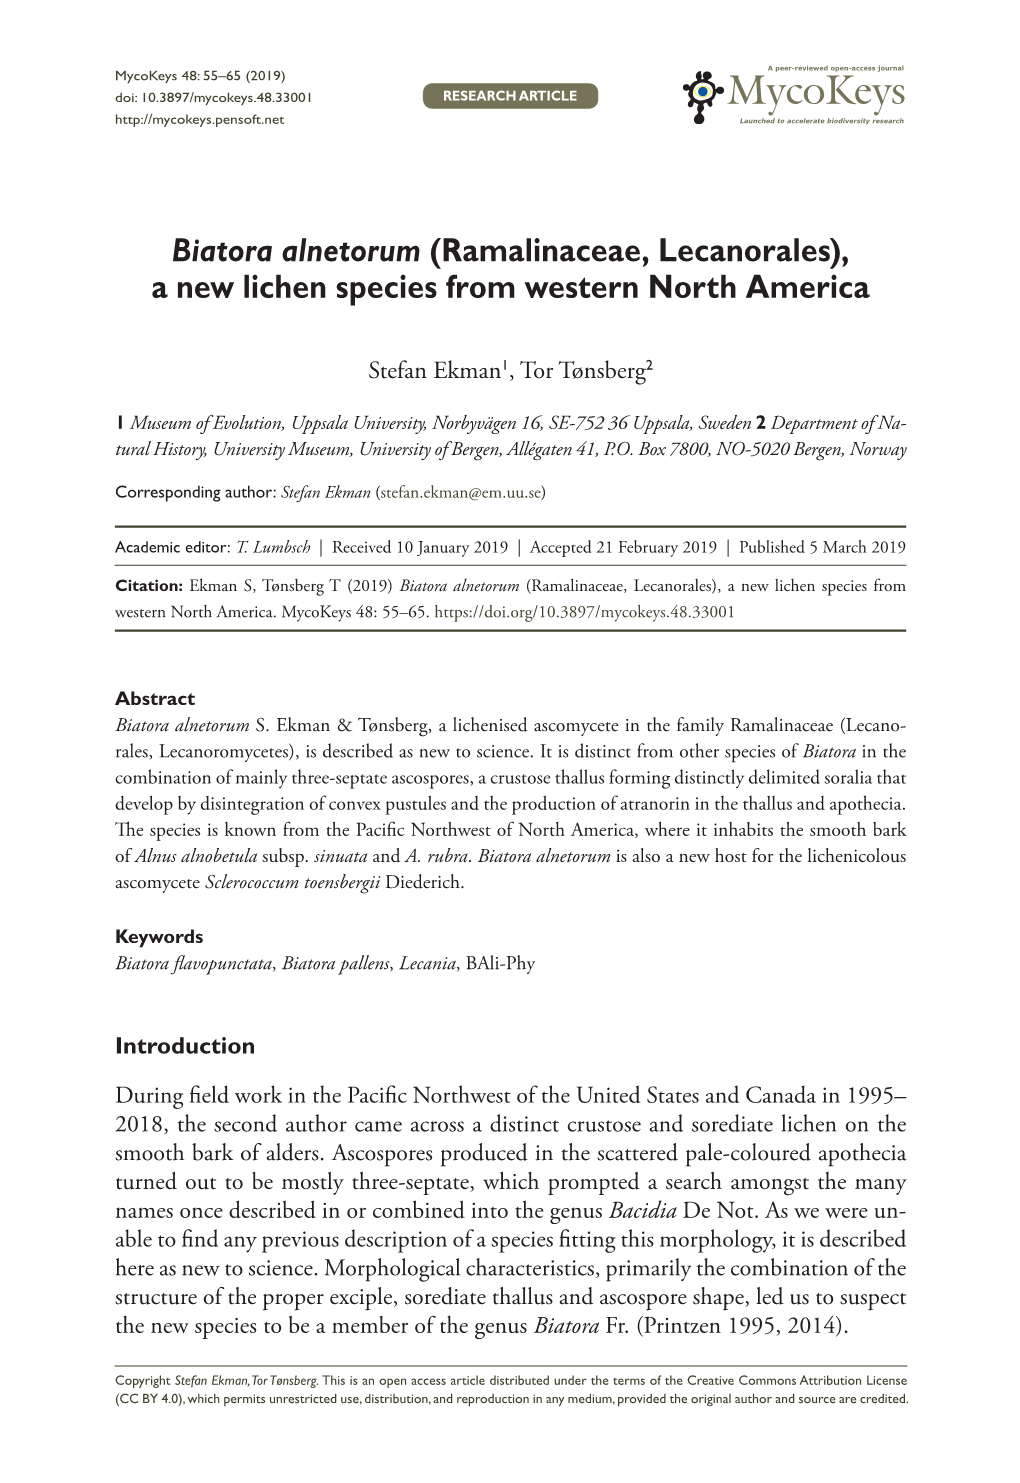 Biatora Alnetorum (Ramalinaceae, Lecanorales), a New Lichen Species from Western North America